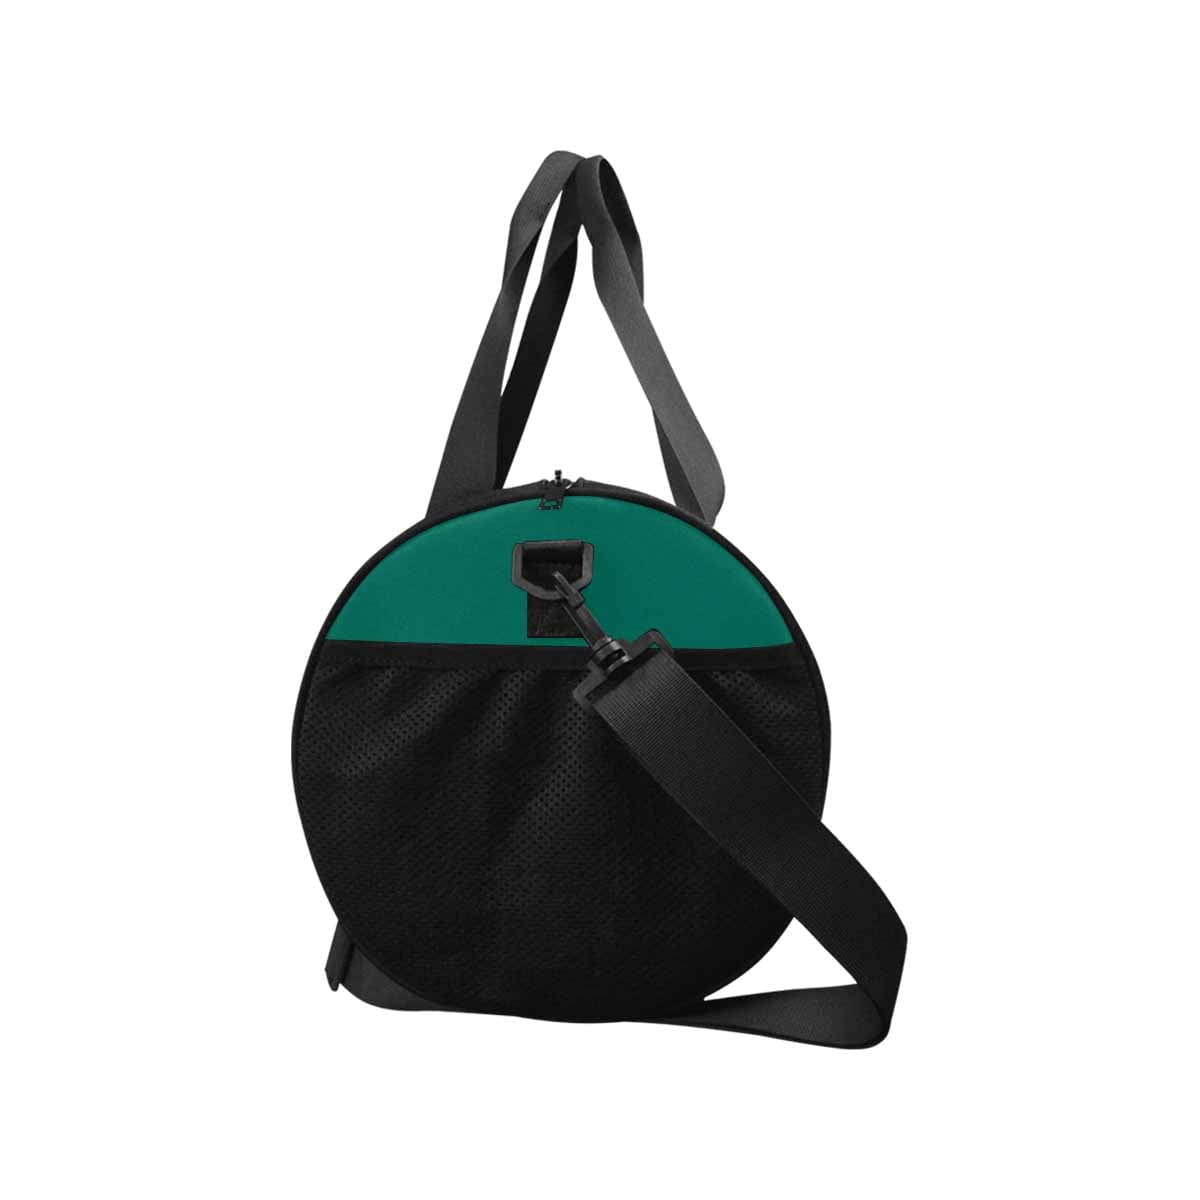 Travel Duffel Bag Teal Green Carry On - Bags | Duffel Bags